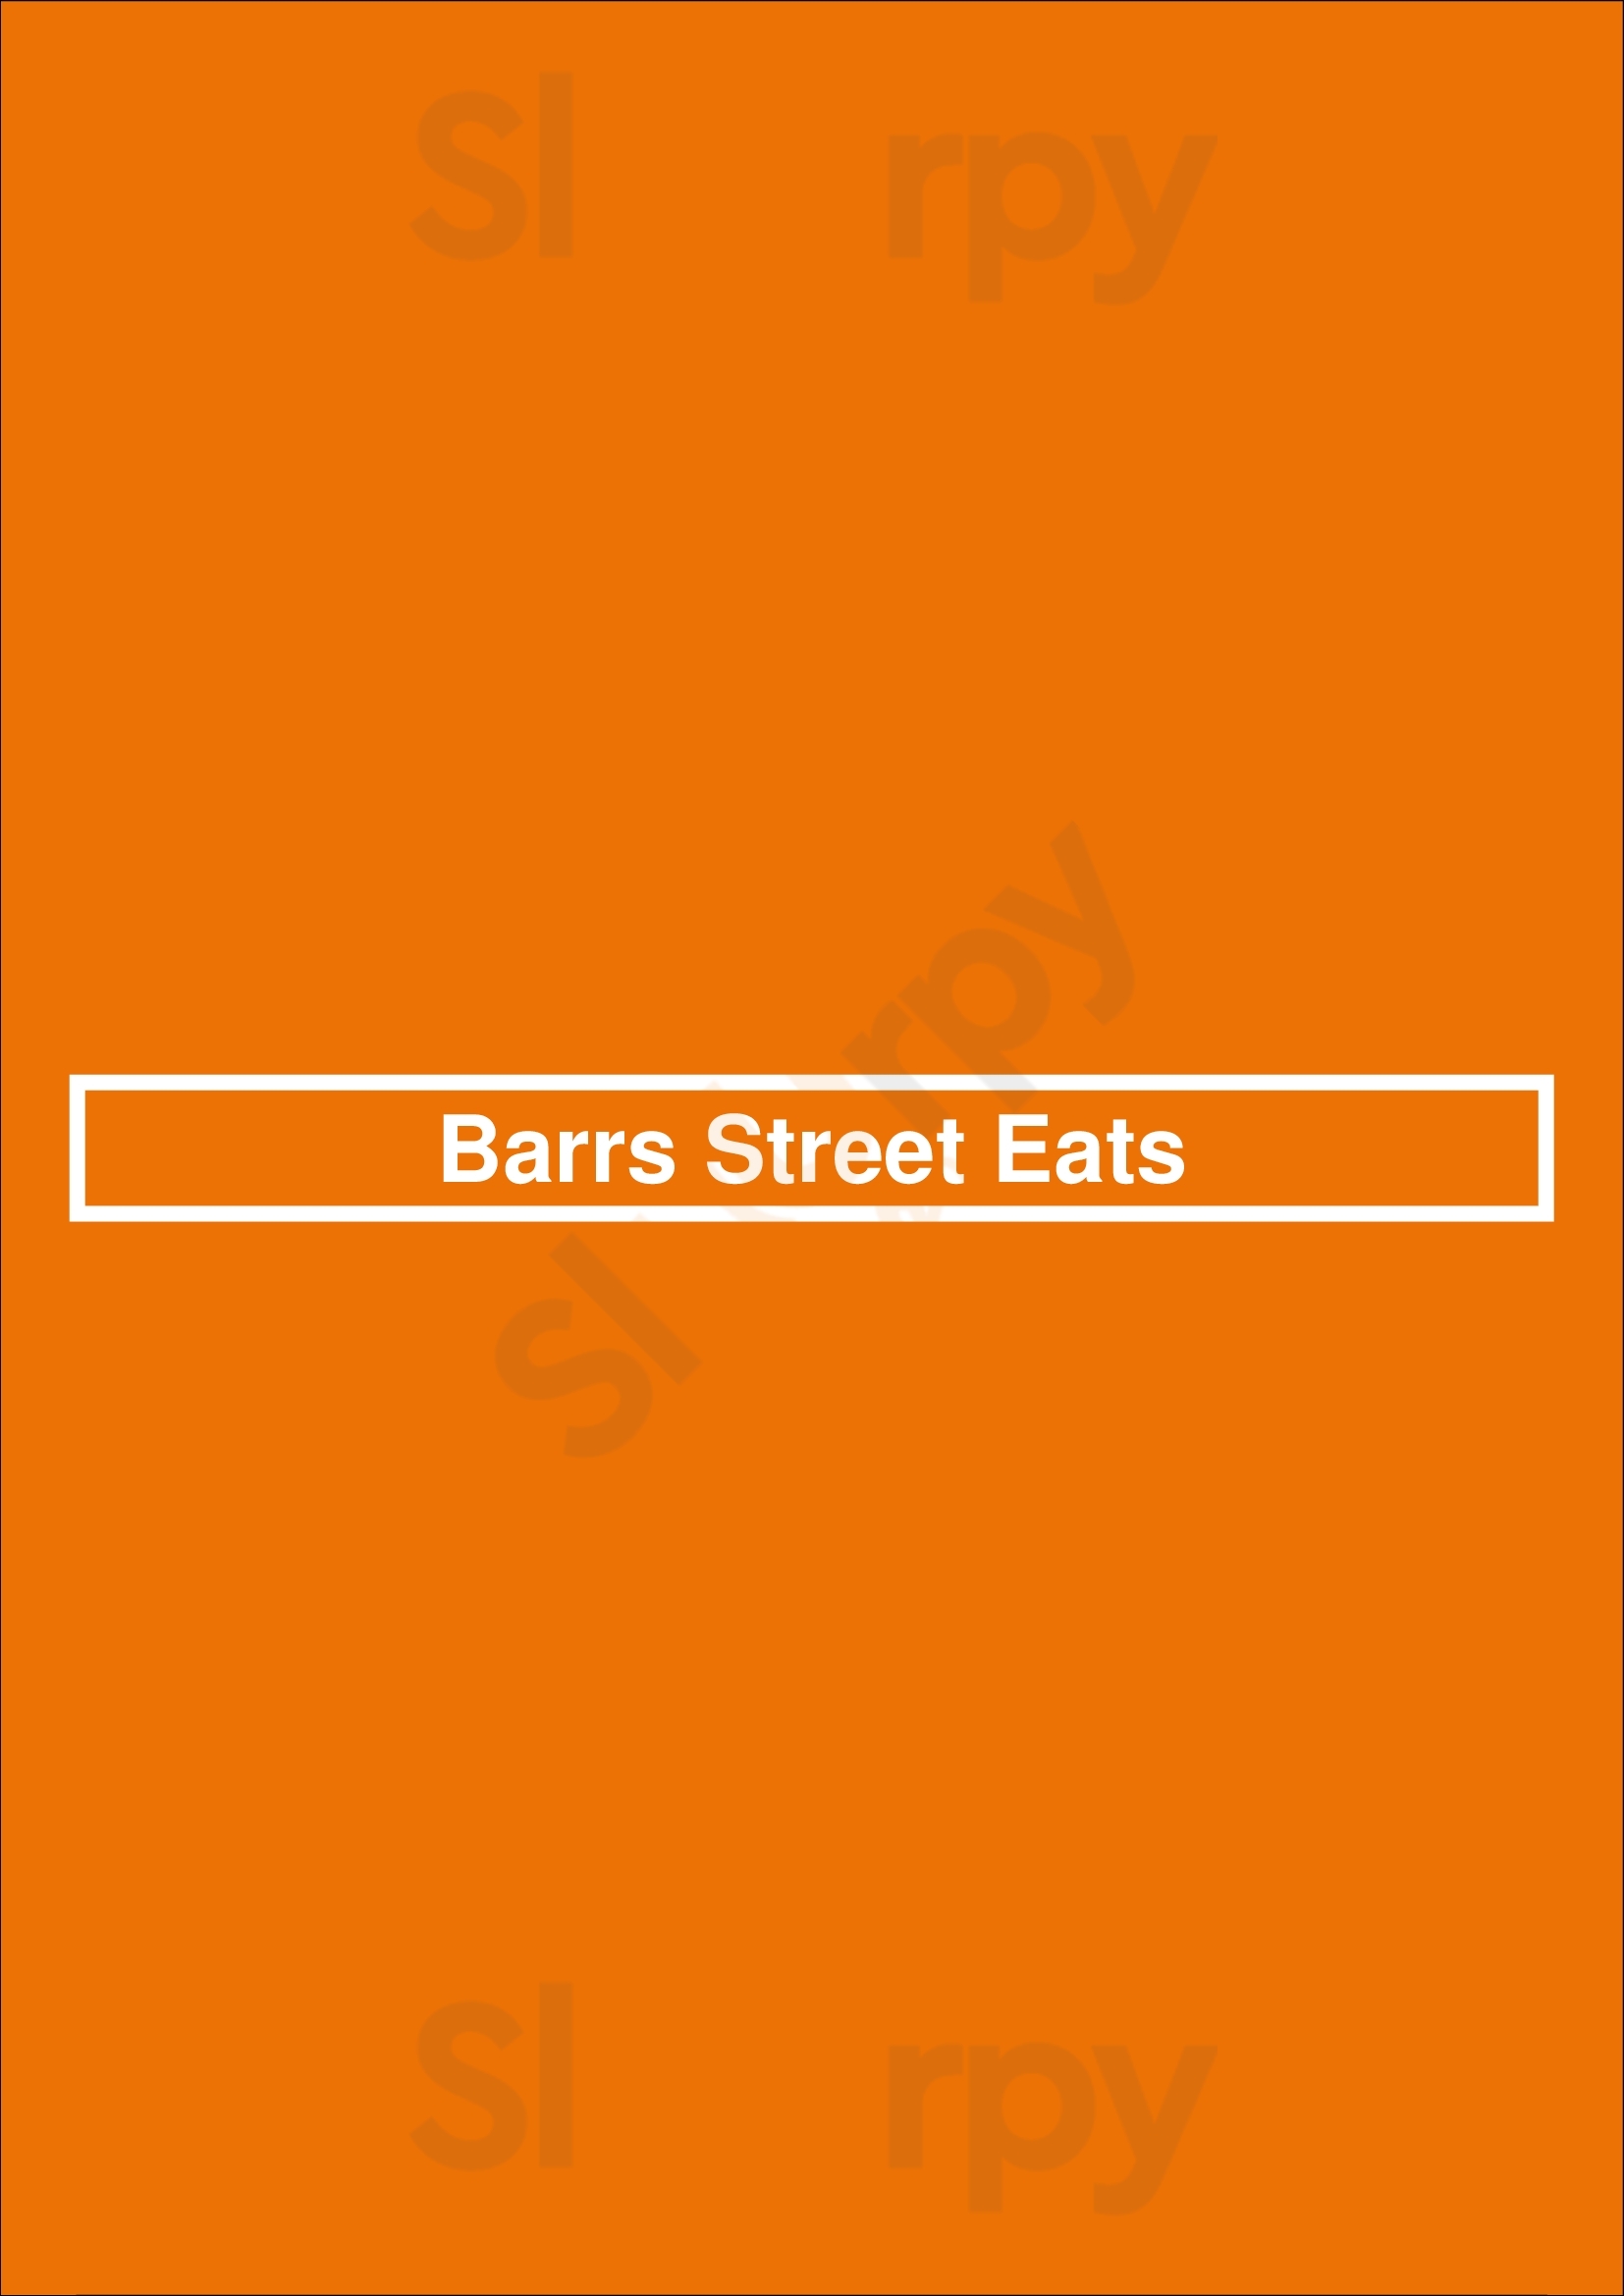 Barrs Street Eats Jacksonville Menu - 1